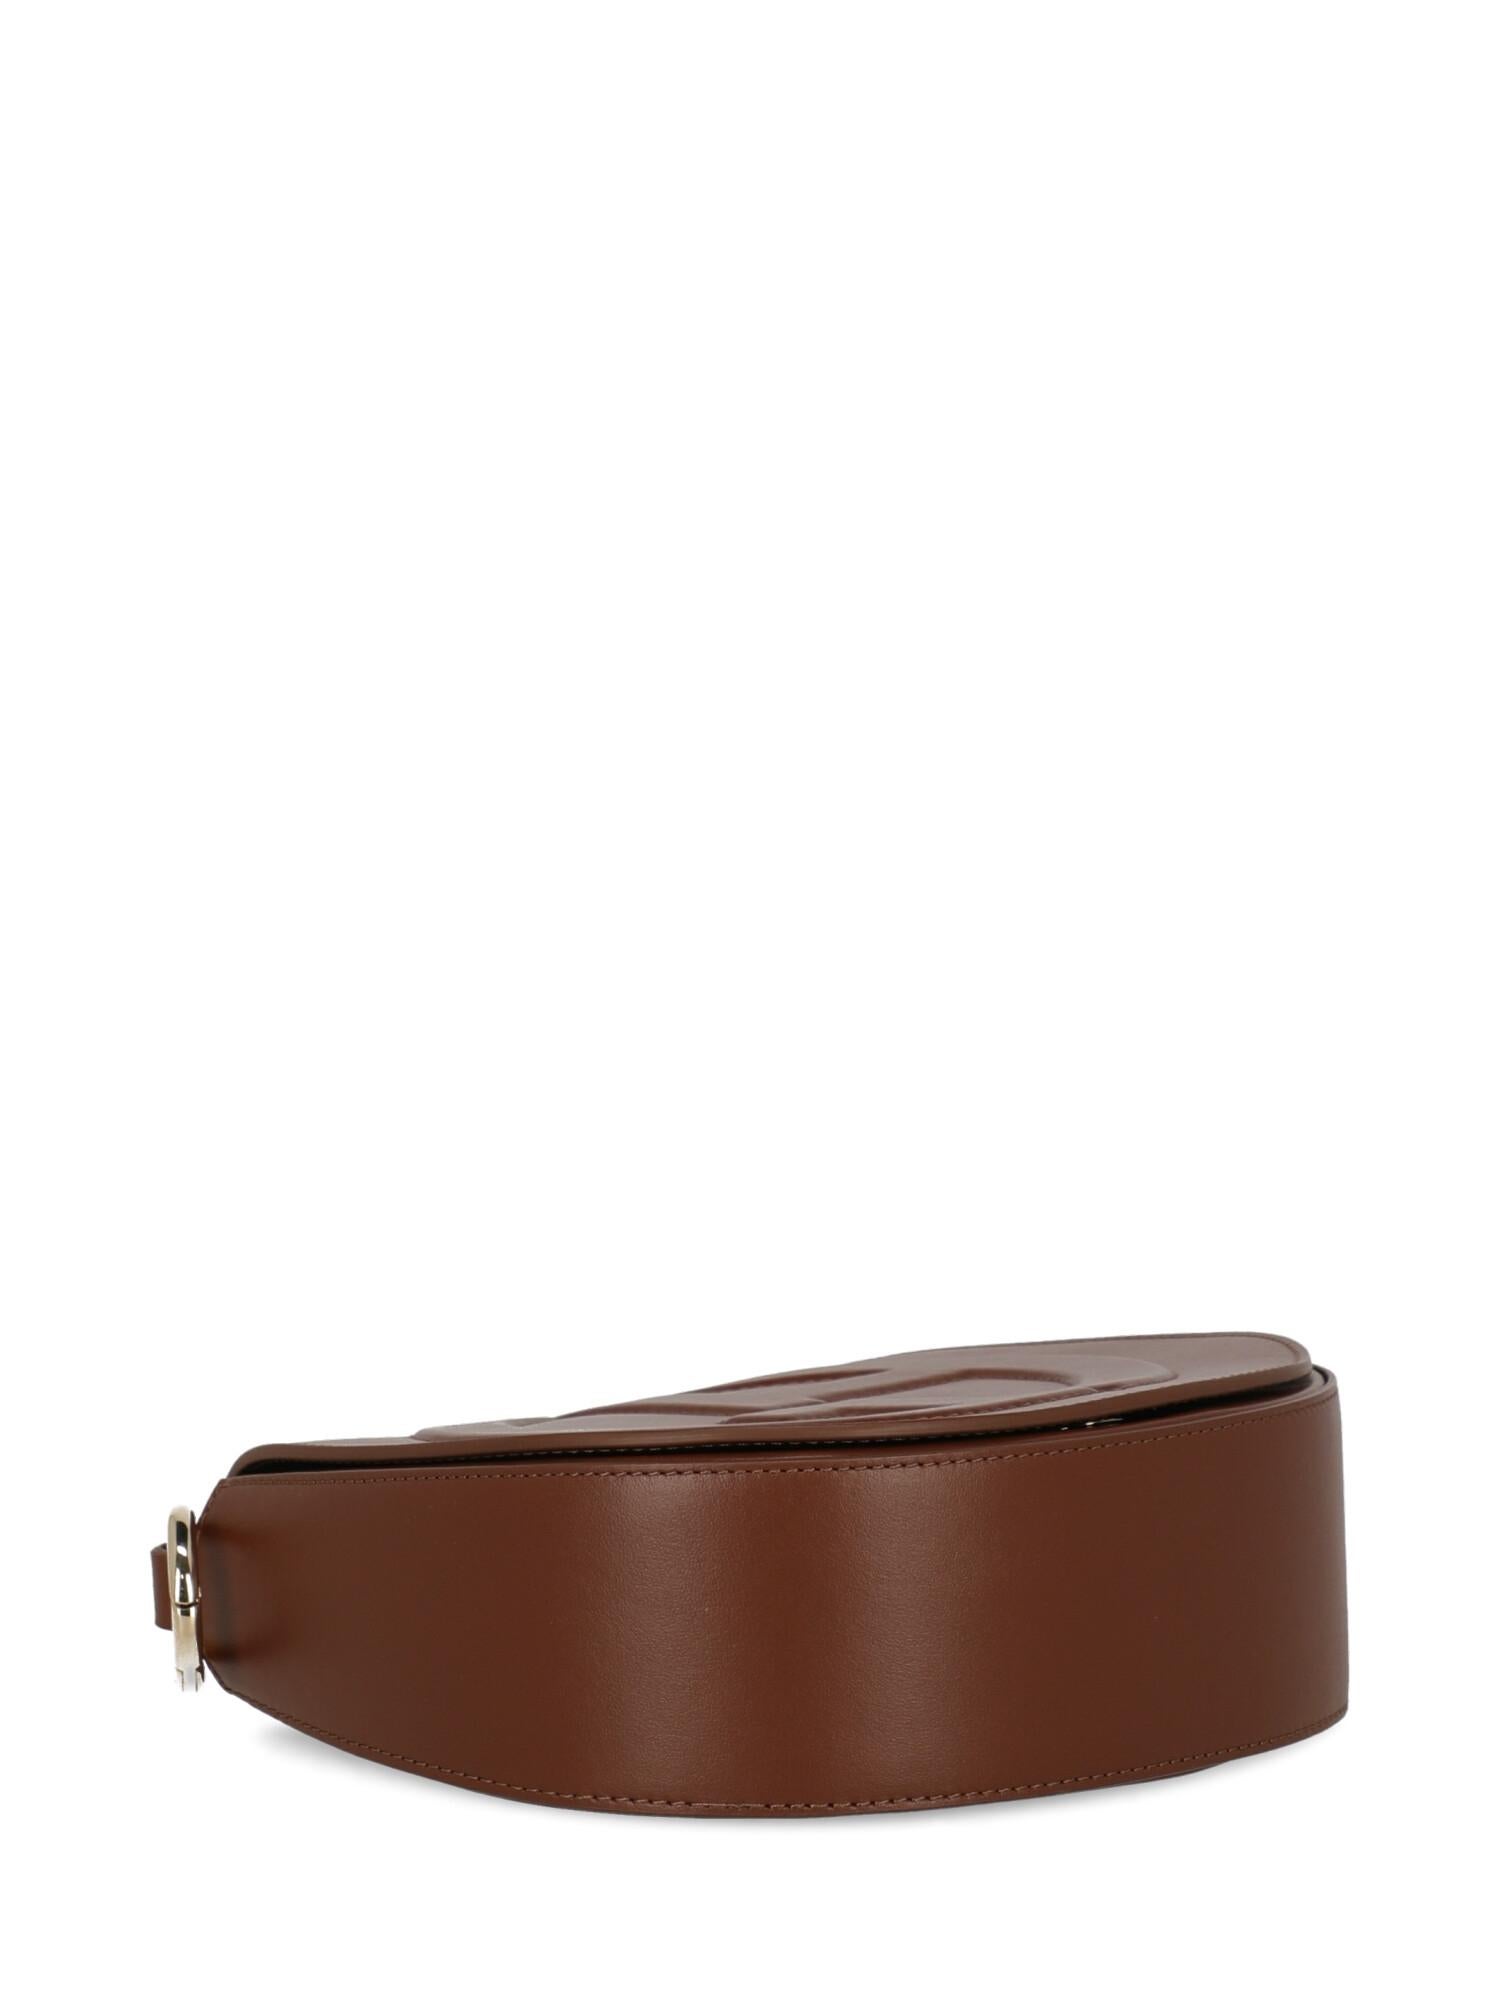 Giorgio Armani Woman Shoulder bag  Brown Leather For Sale 1